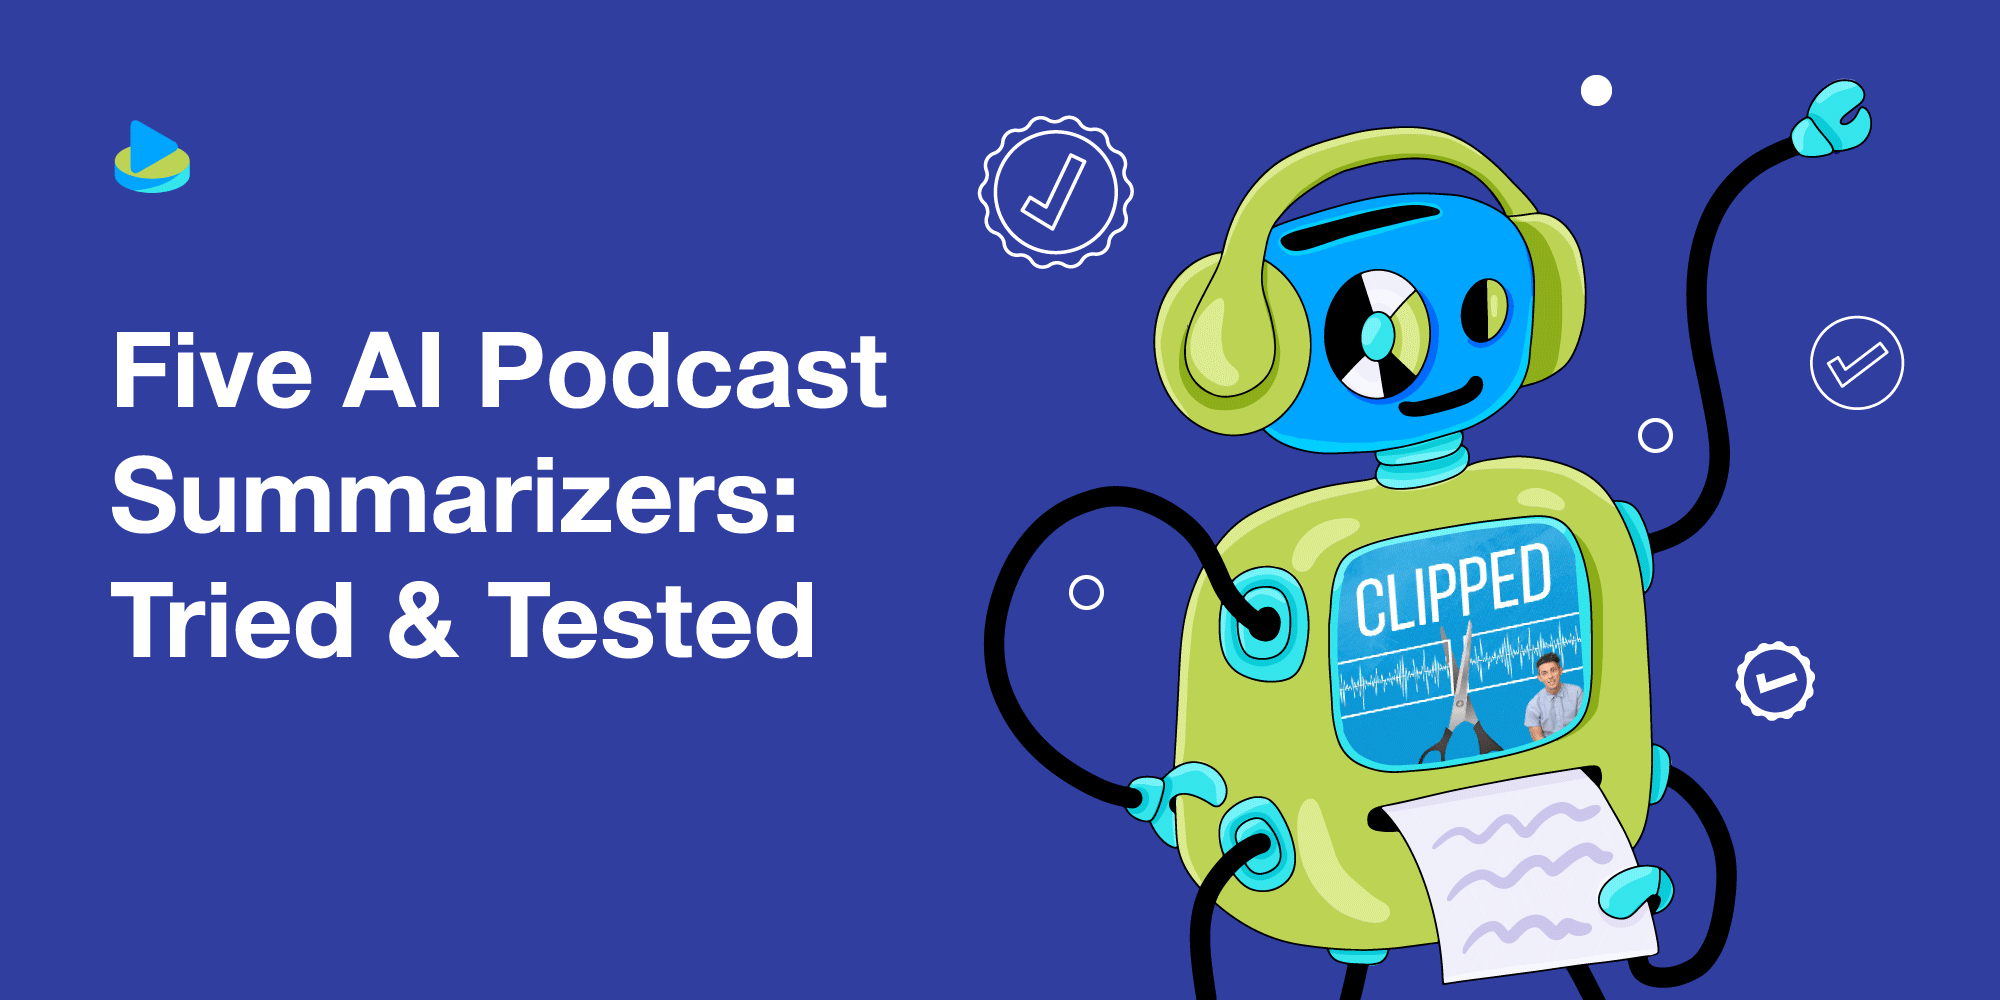 Five AI Podcast Summarizers: Tried & Tested